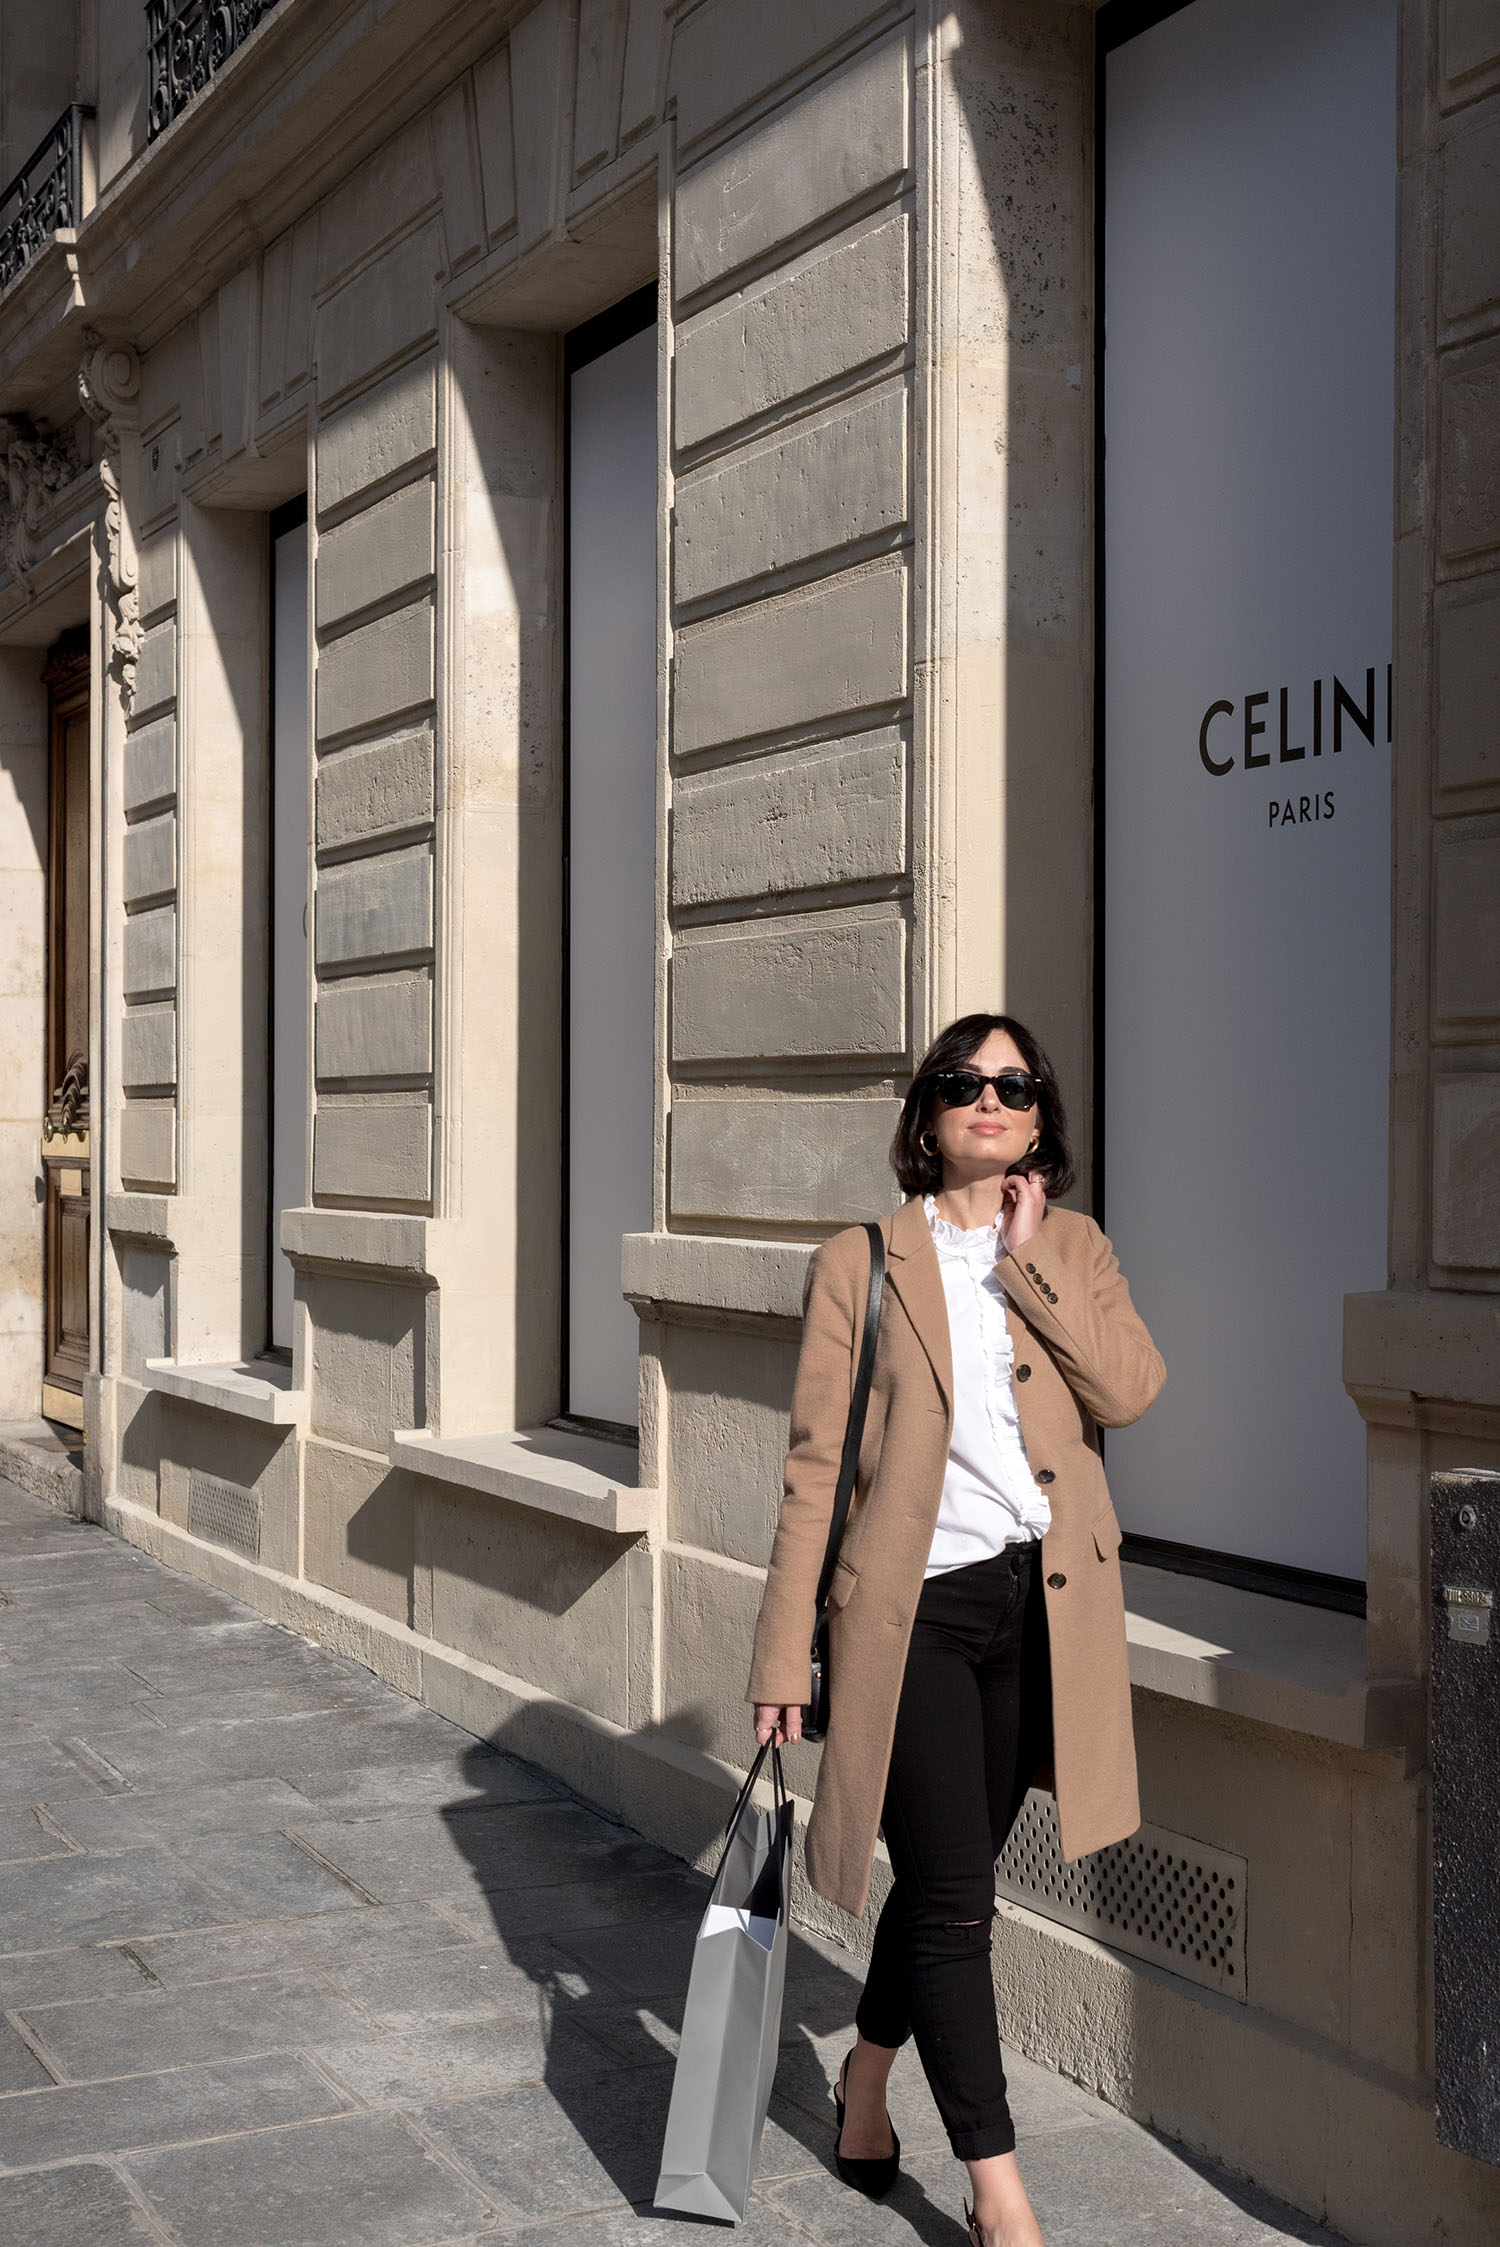 Top Canadian fashion blogger Cee Fardoe of Coco & Vera outside the Celine store in Paris, wearing a Sezane white blouse and Mavi block heel pumps